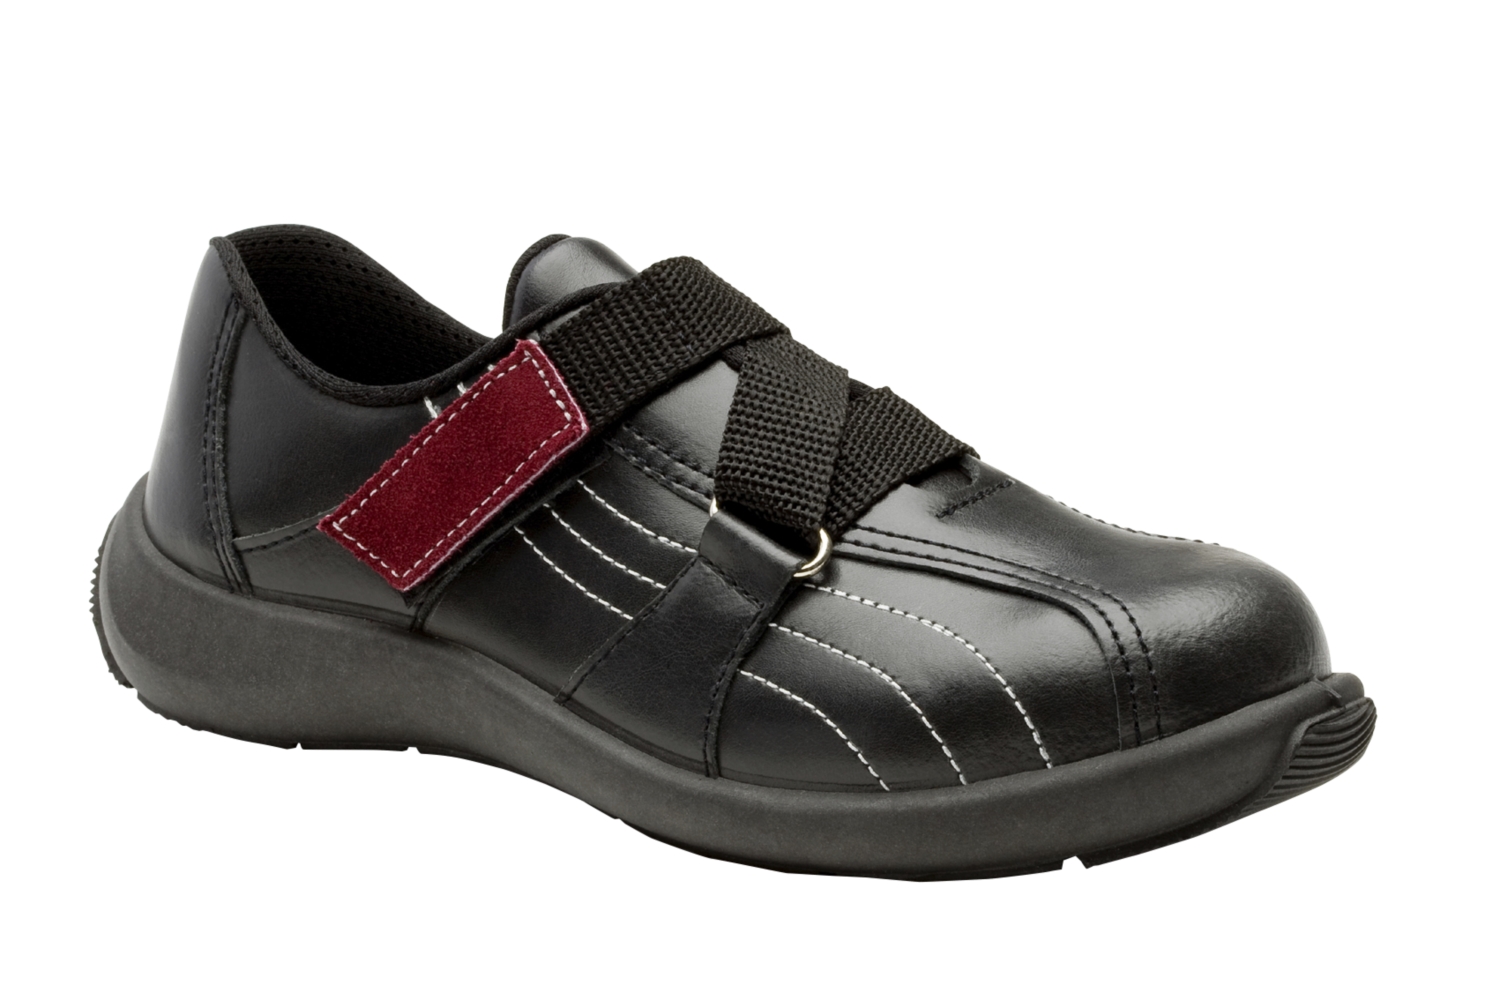  Chaussures basses Lisa 8982 - Noir 